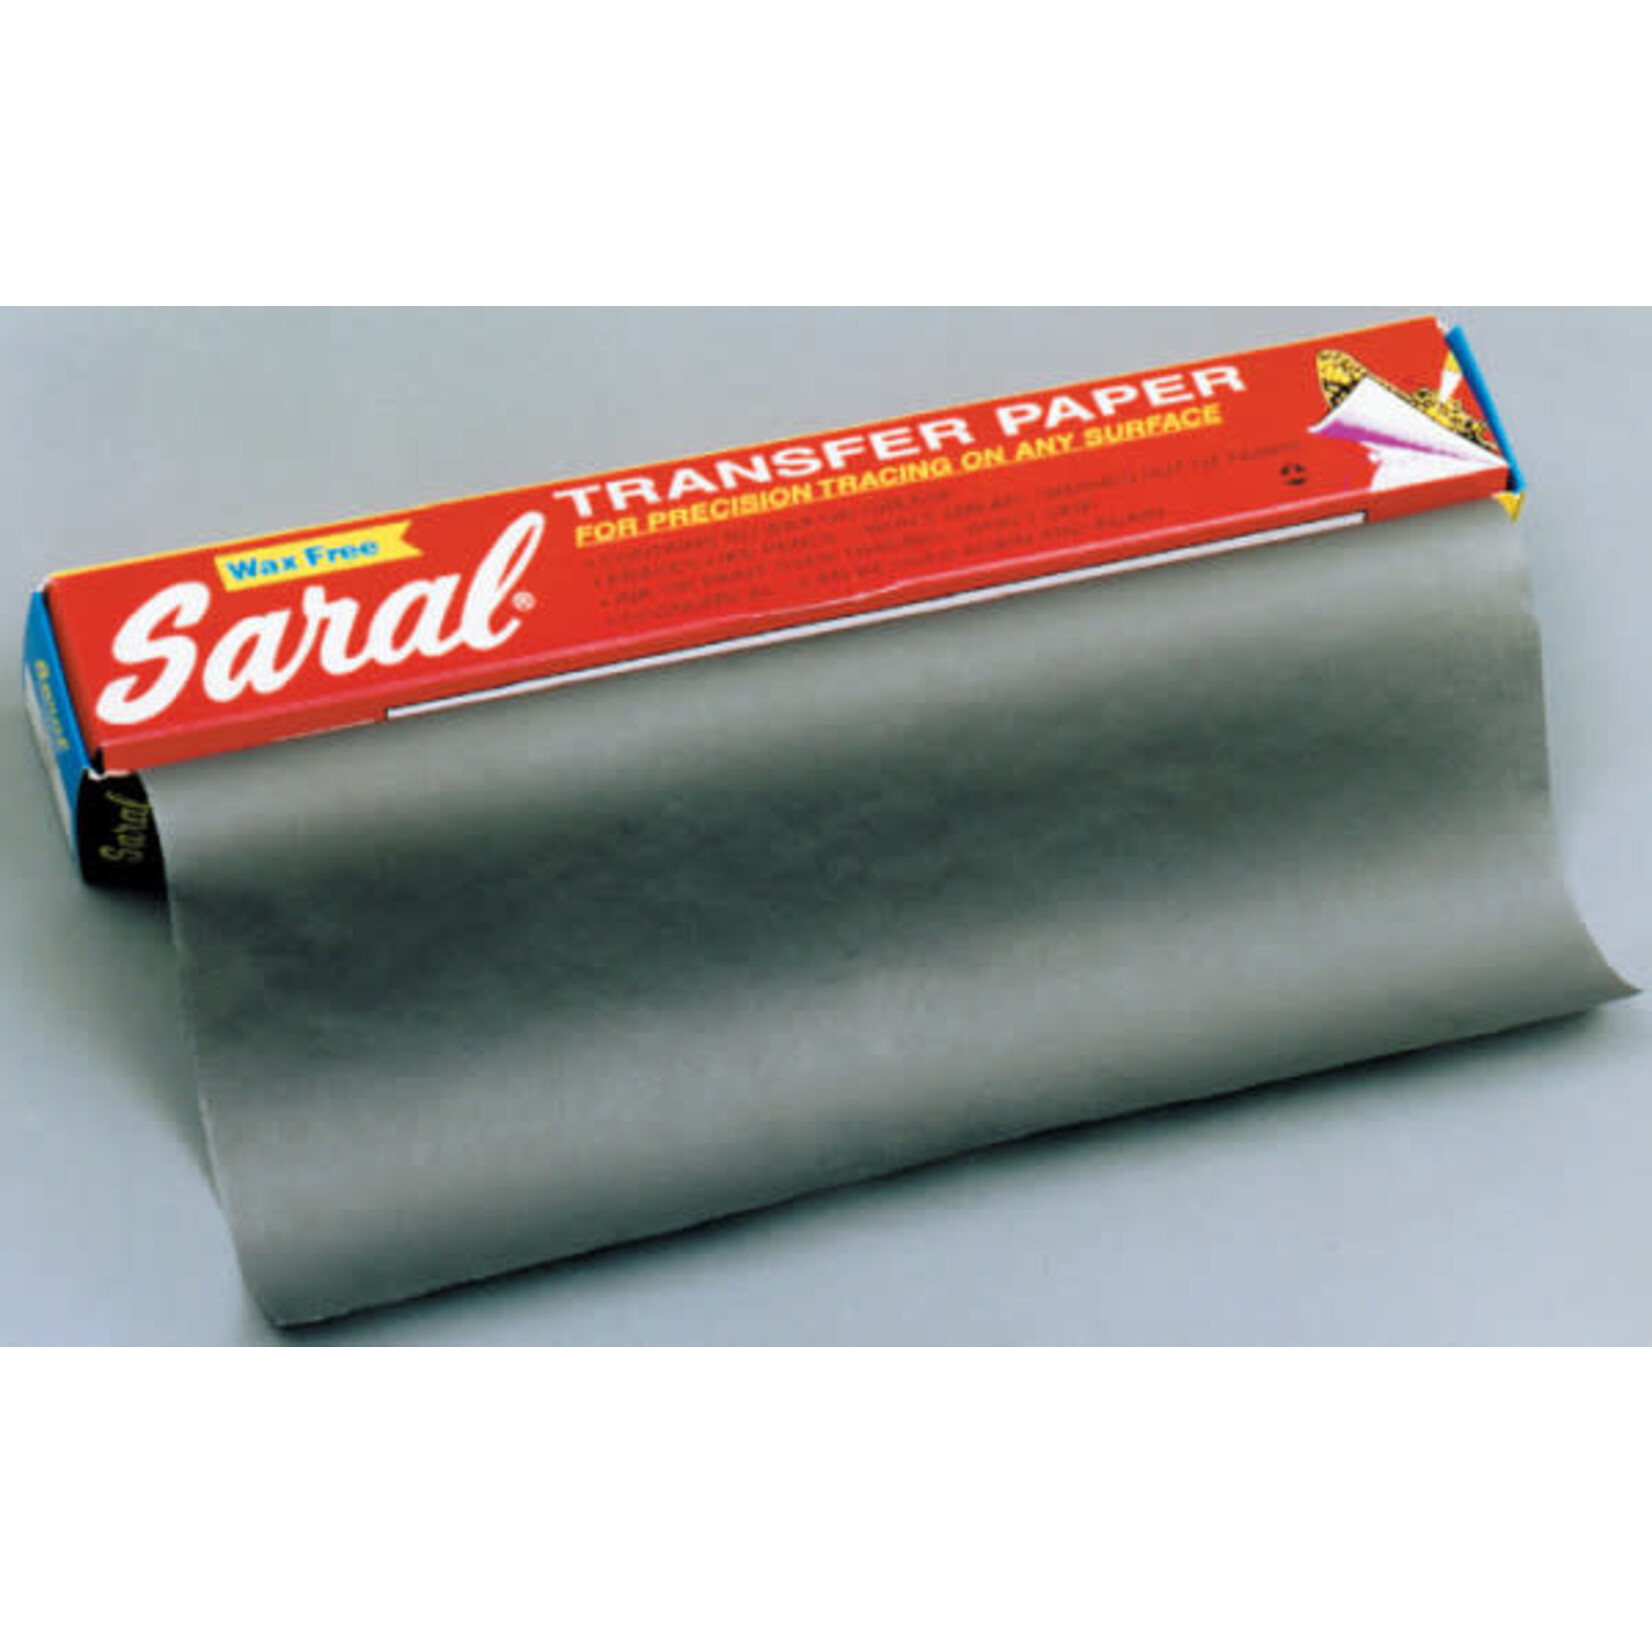 Saral Saral Paper Graphite Blk 12Ft